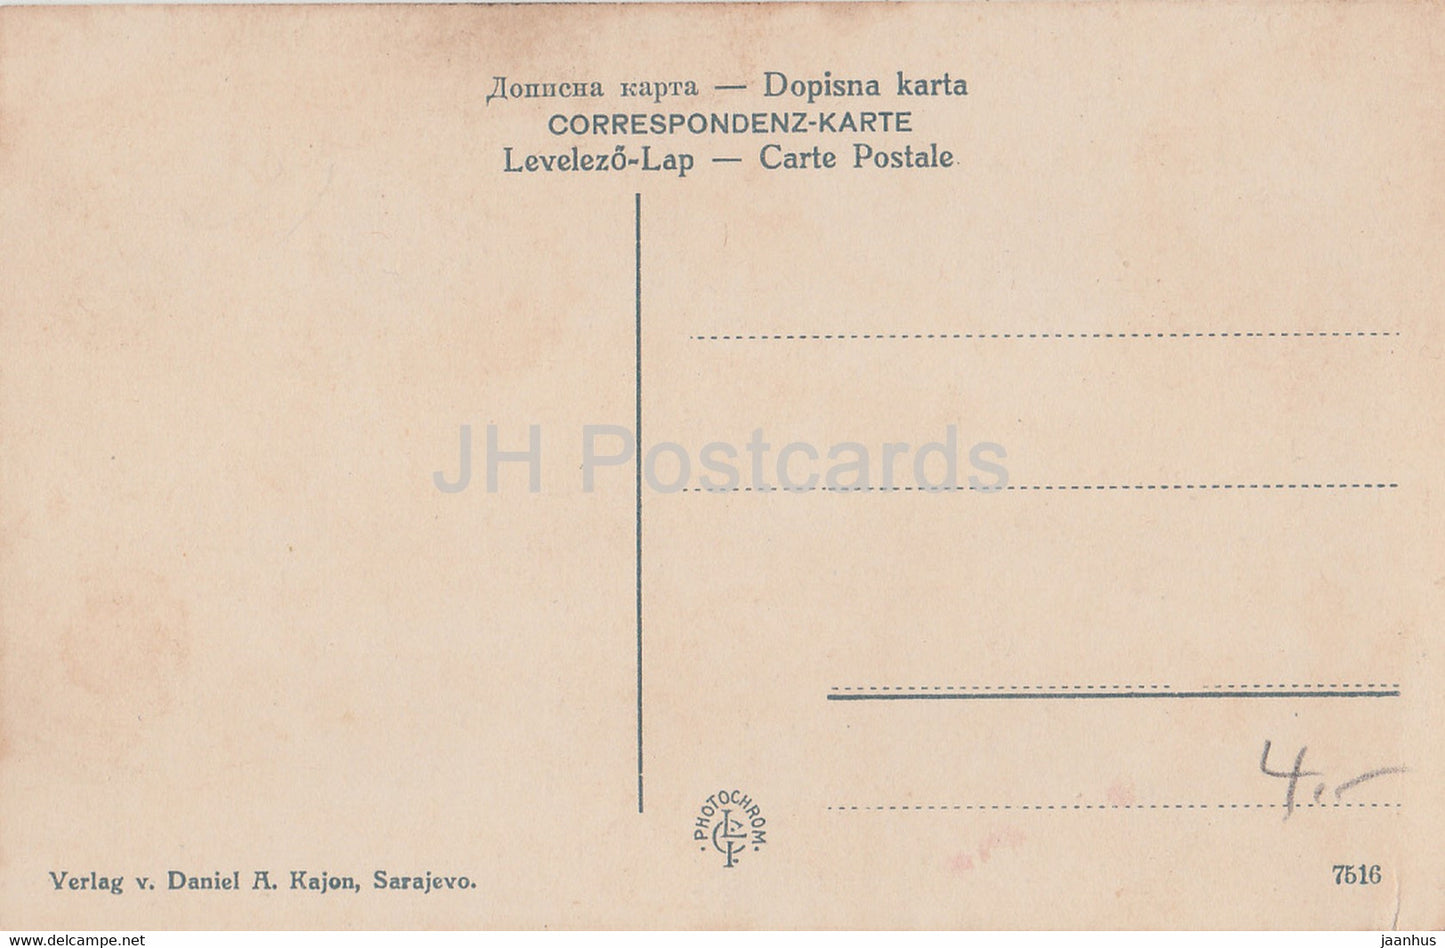 Sarajevo - Rathauspartie - Photochrom - 7516 - carte postale ancienne - 1950 - Bosnie-Herzégovine - Yougoslavie - inutilisée